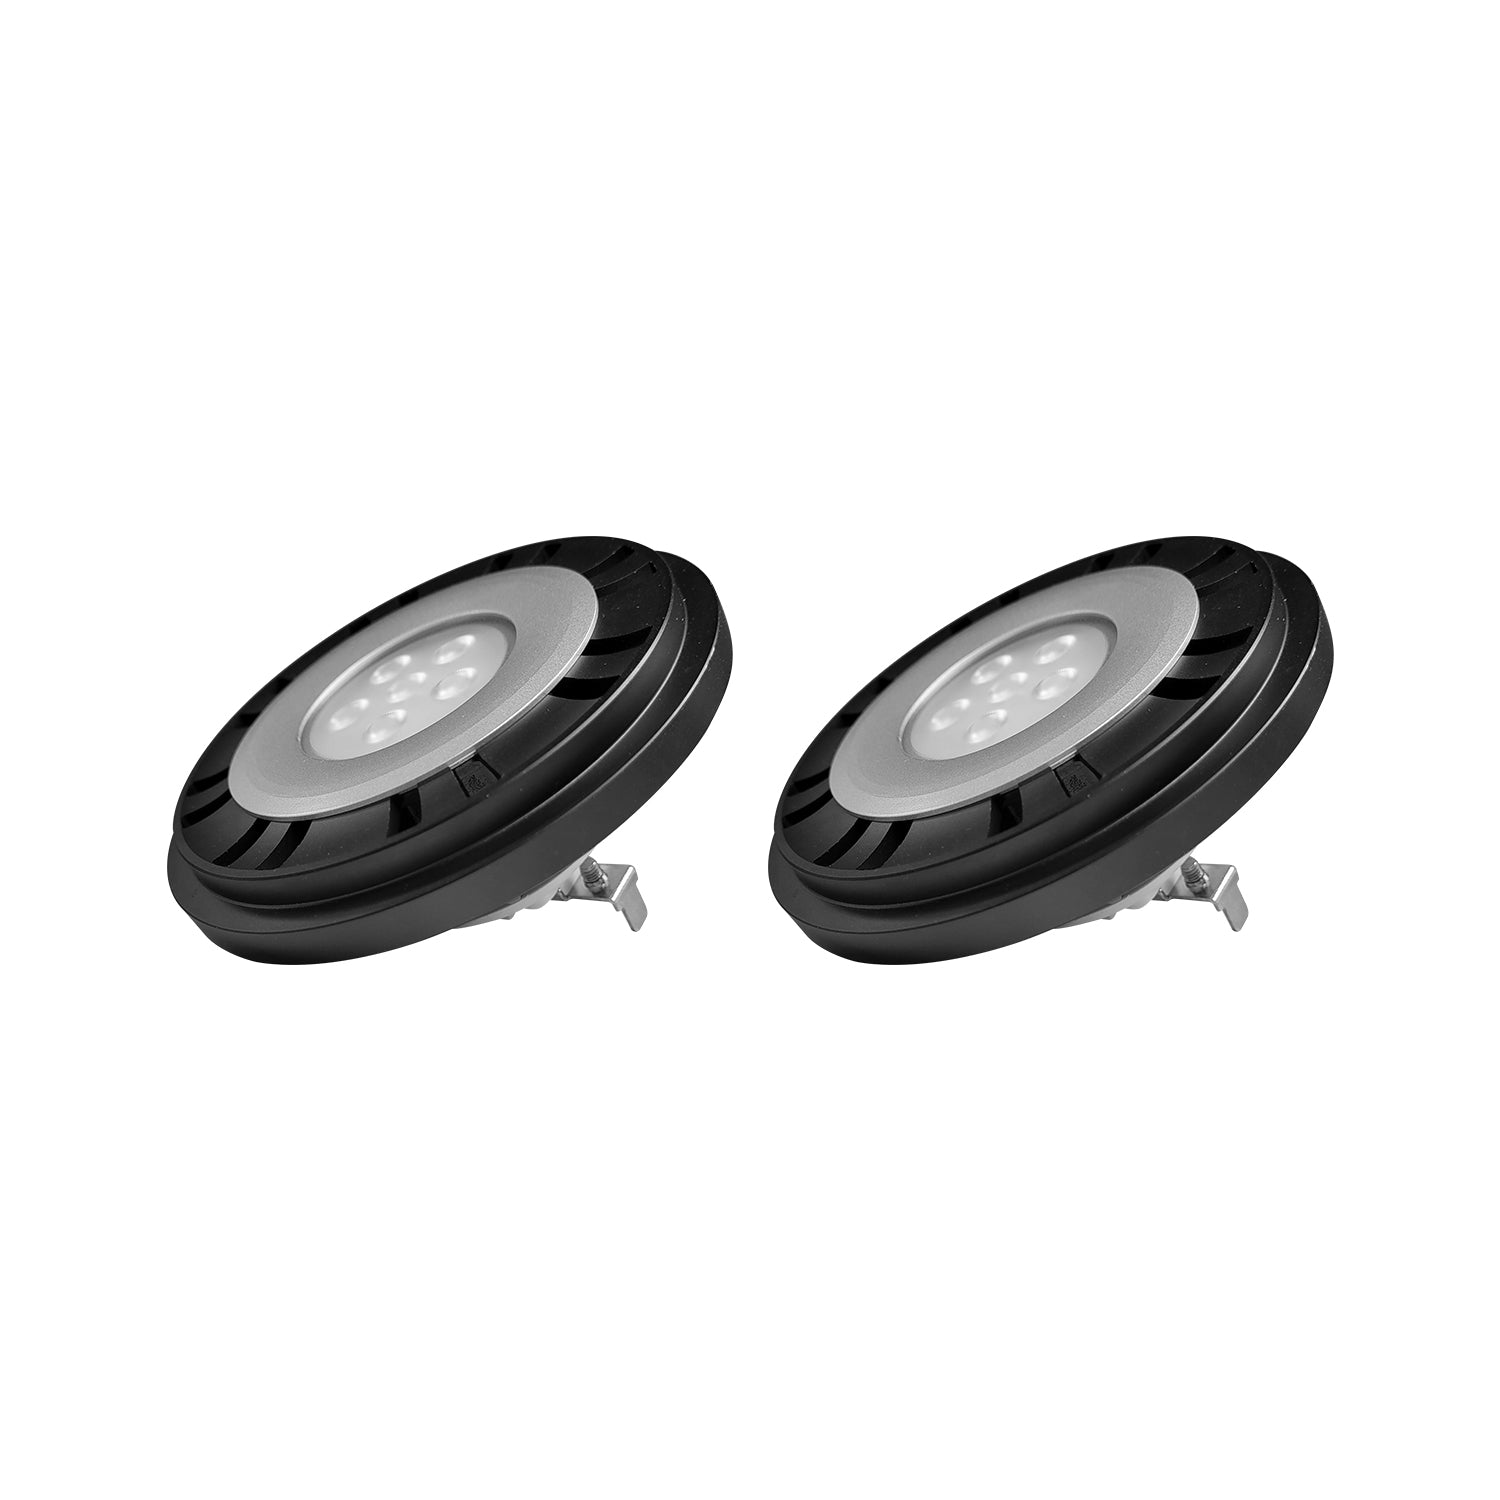 Pair of black PAR36 low voltage waterproof LED landscape bulbs designed for efficient outdoor lighting